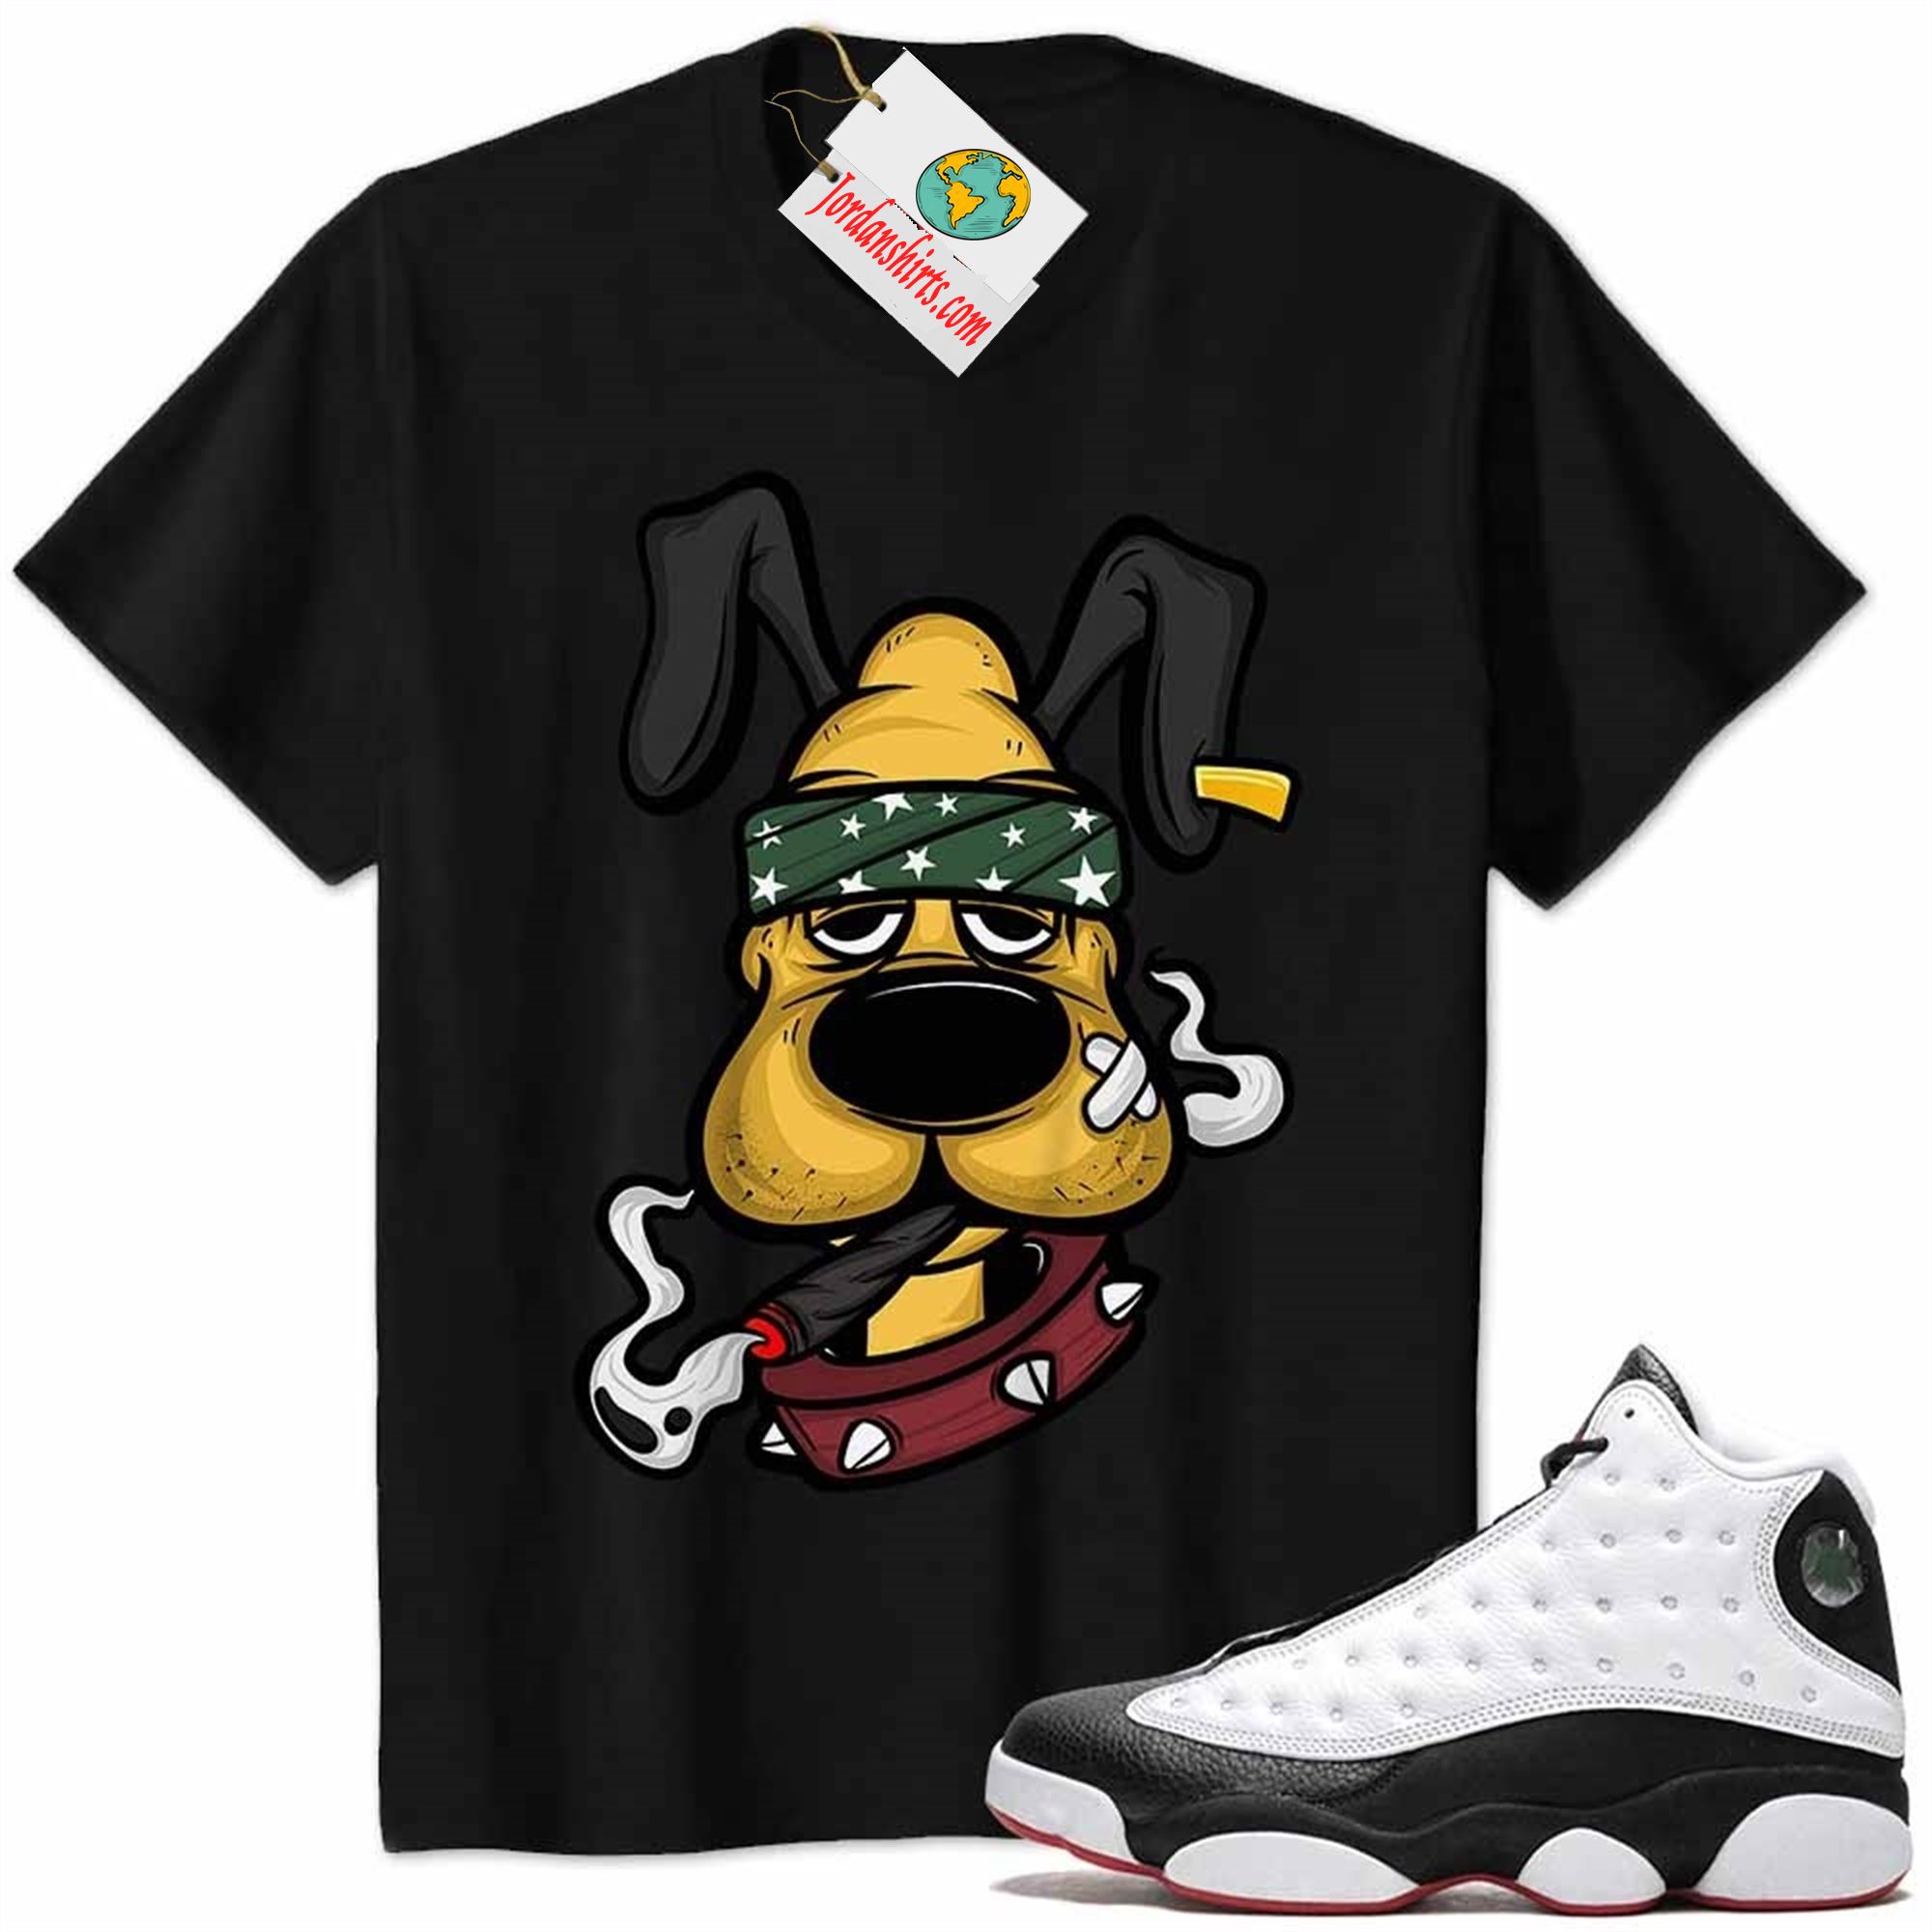 Jordan 13 Shirt, Gangster Pluto Smoke Weed Black Air Jordan 13 He Got Game 13s Full Size Up To 5xl